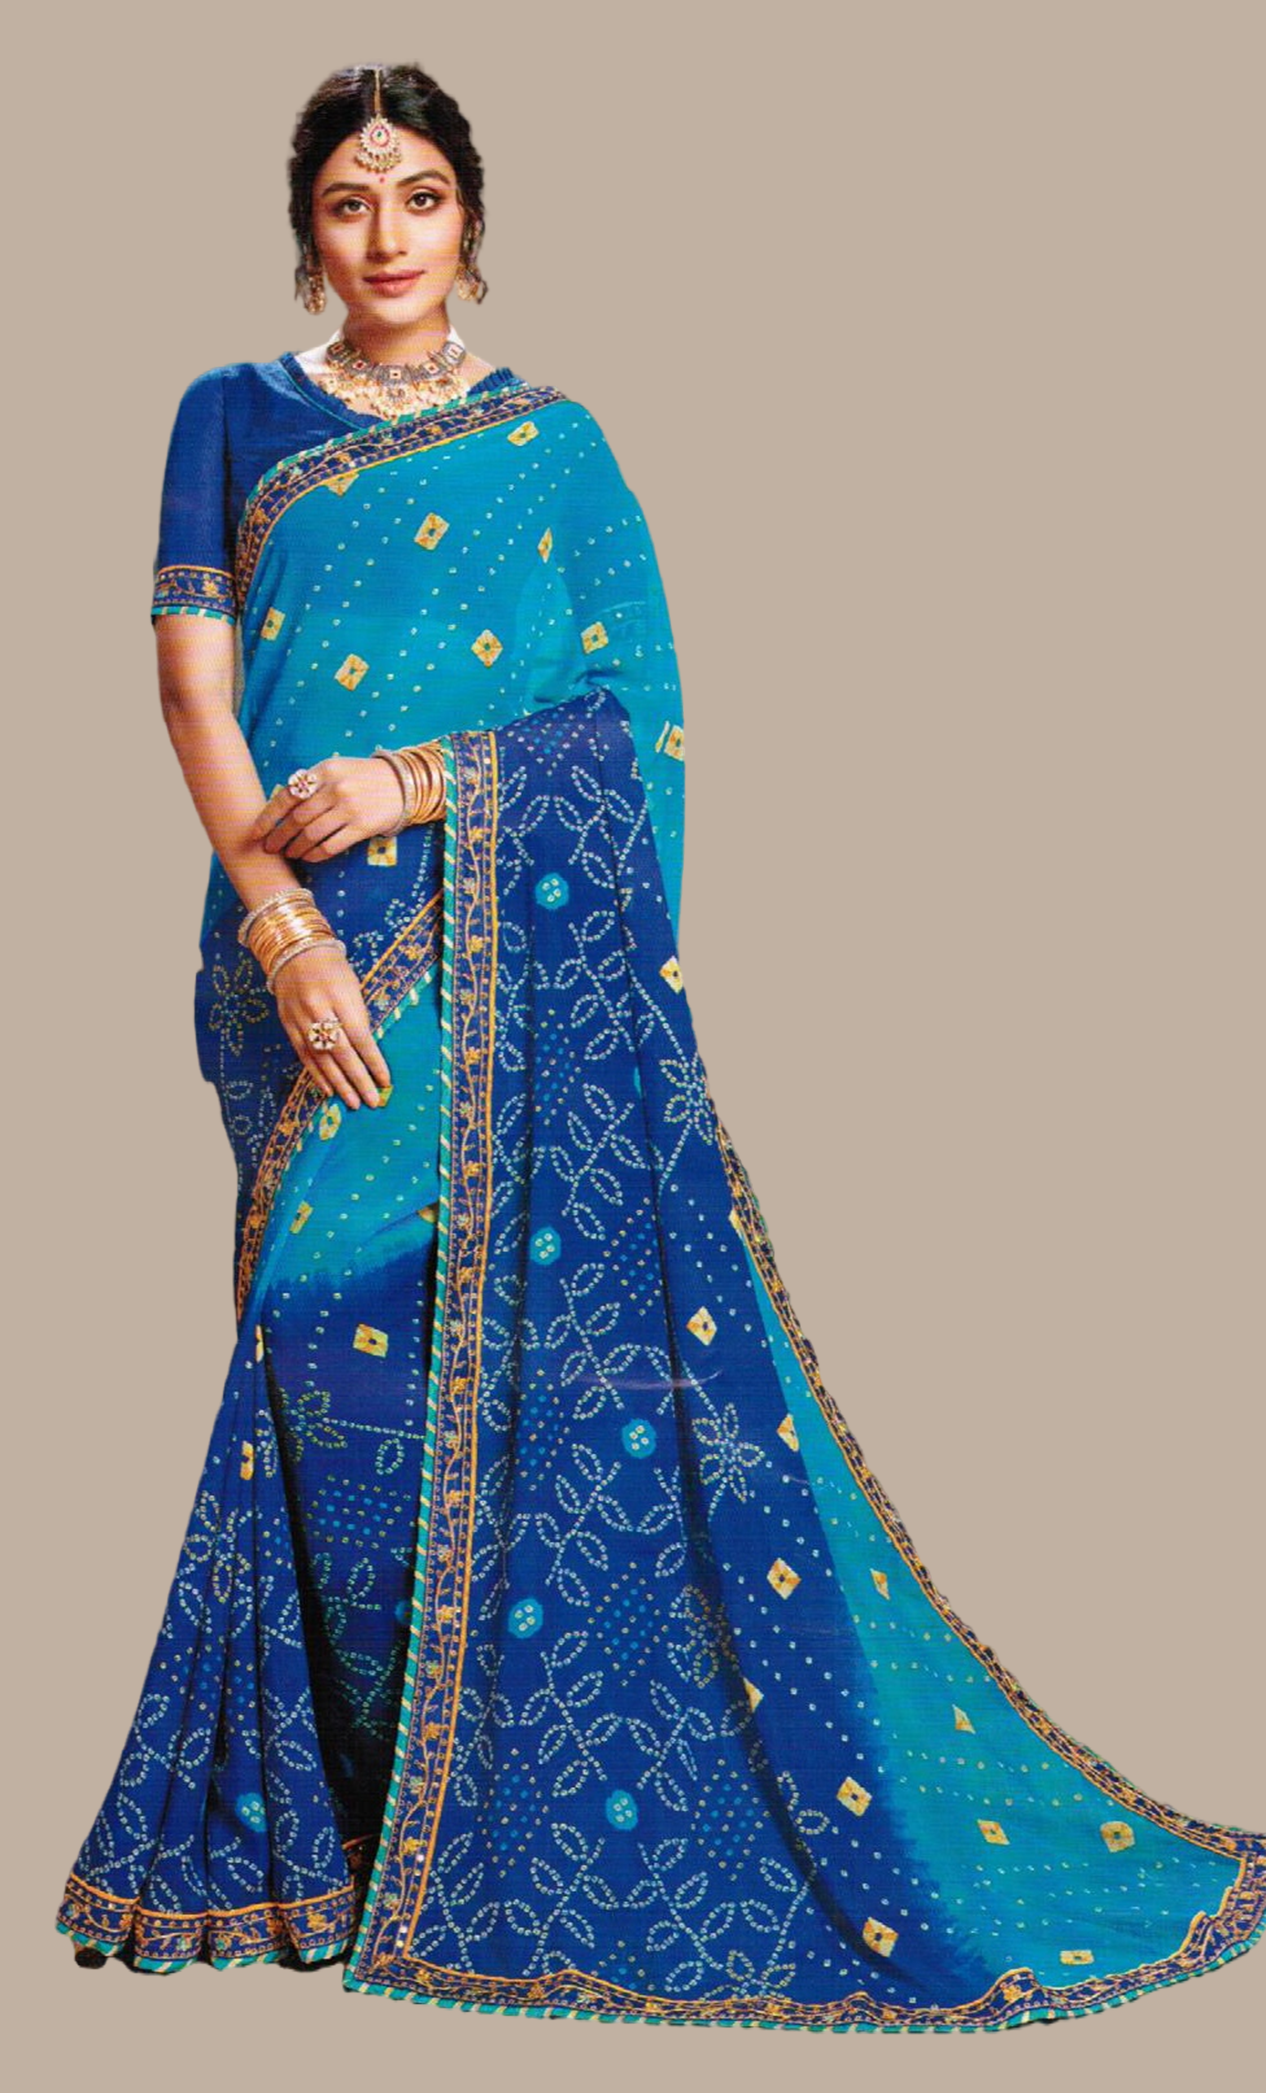 Bright Blue Bandhani Printed Sari Jayshrees Rivaz